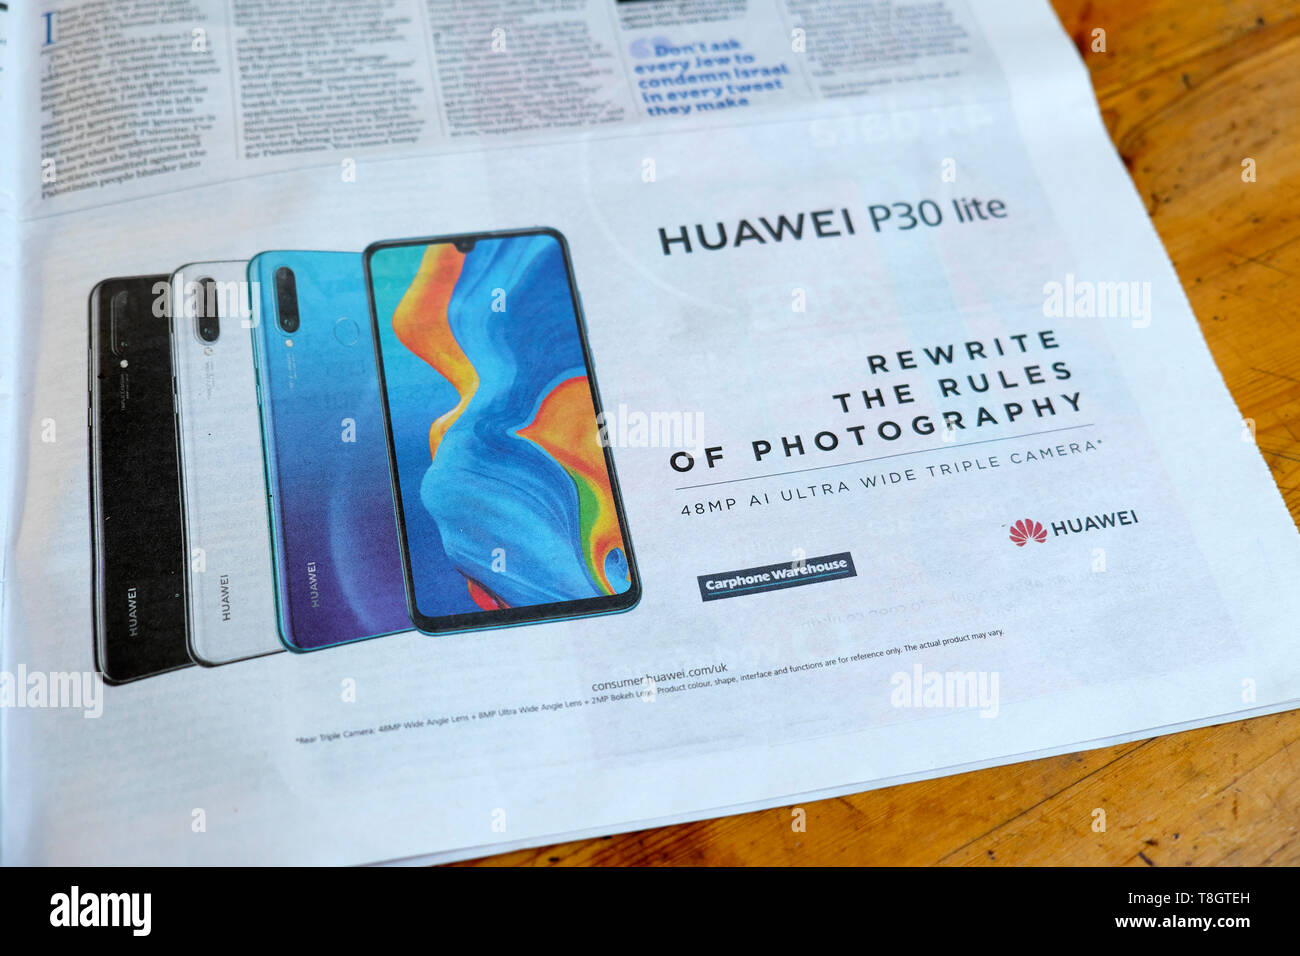 Huawei P30 lite mobile phone advert advertisement in a British newspaper  2019 London England UK Stock Photo - Alamy